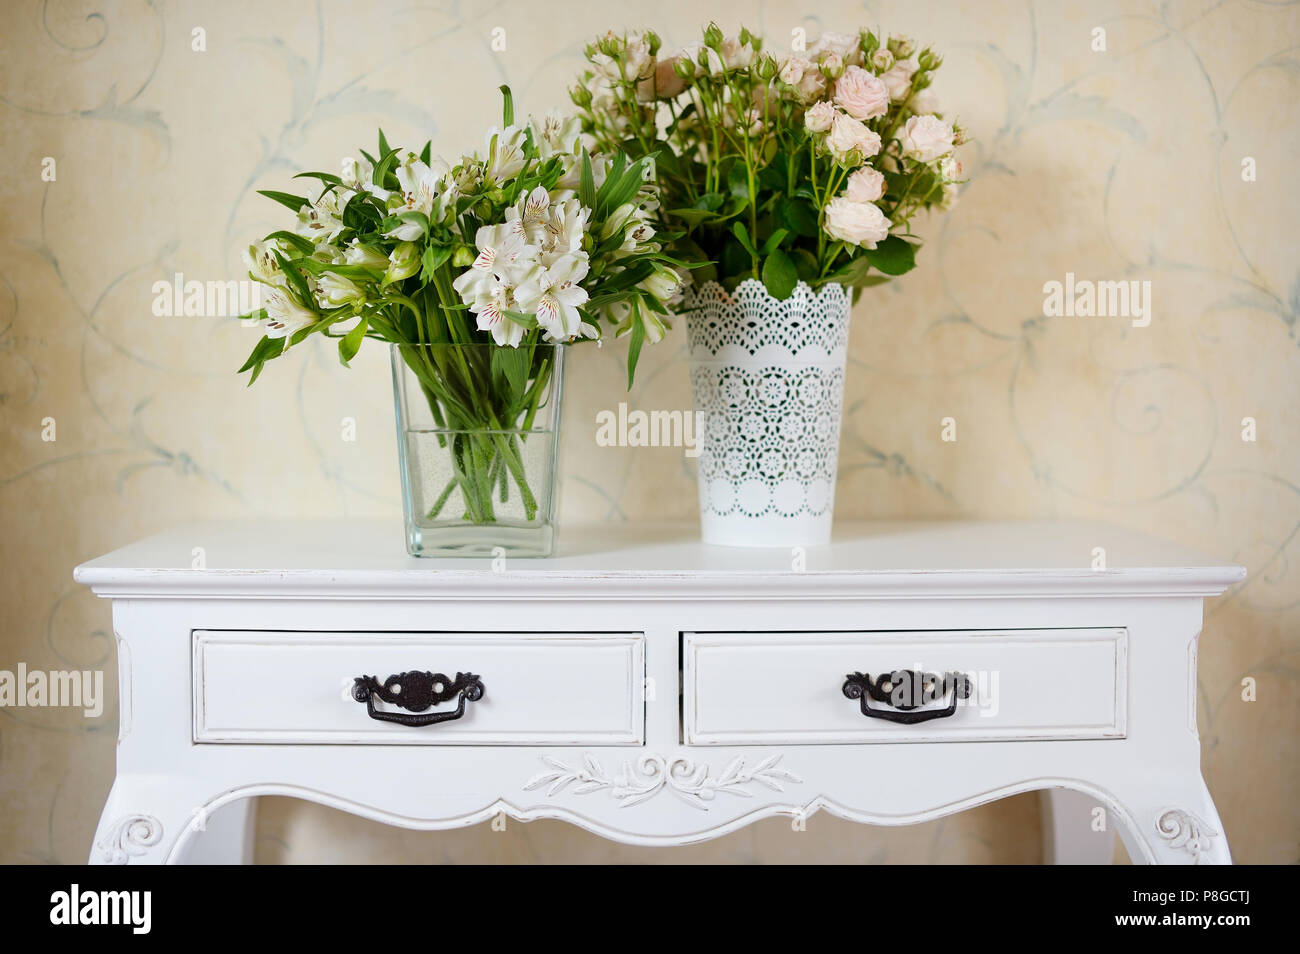 White vase full of white flowers on a counter Stock Photo